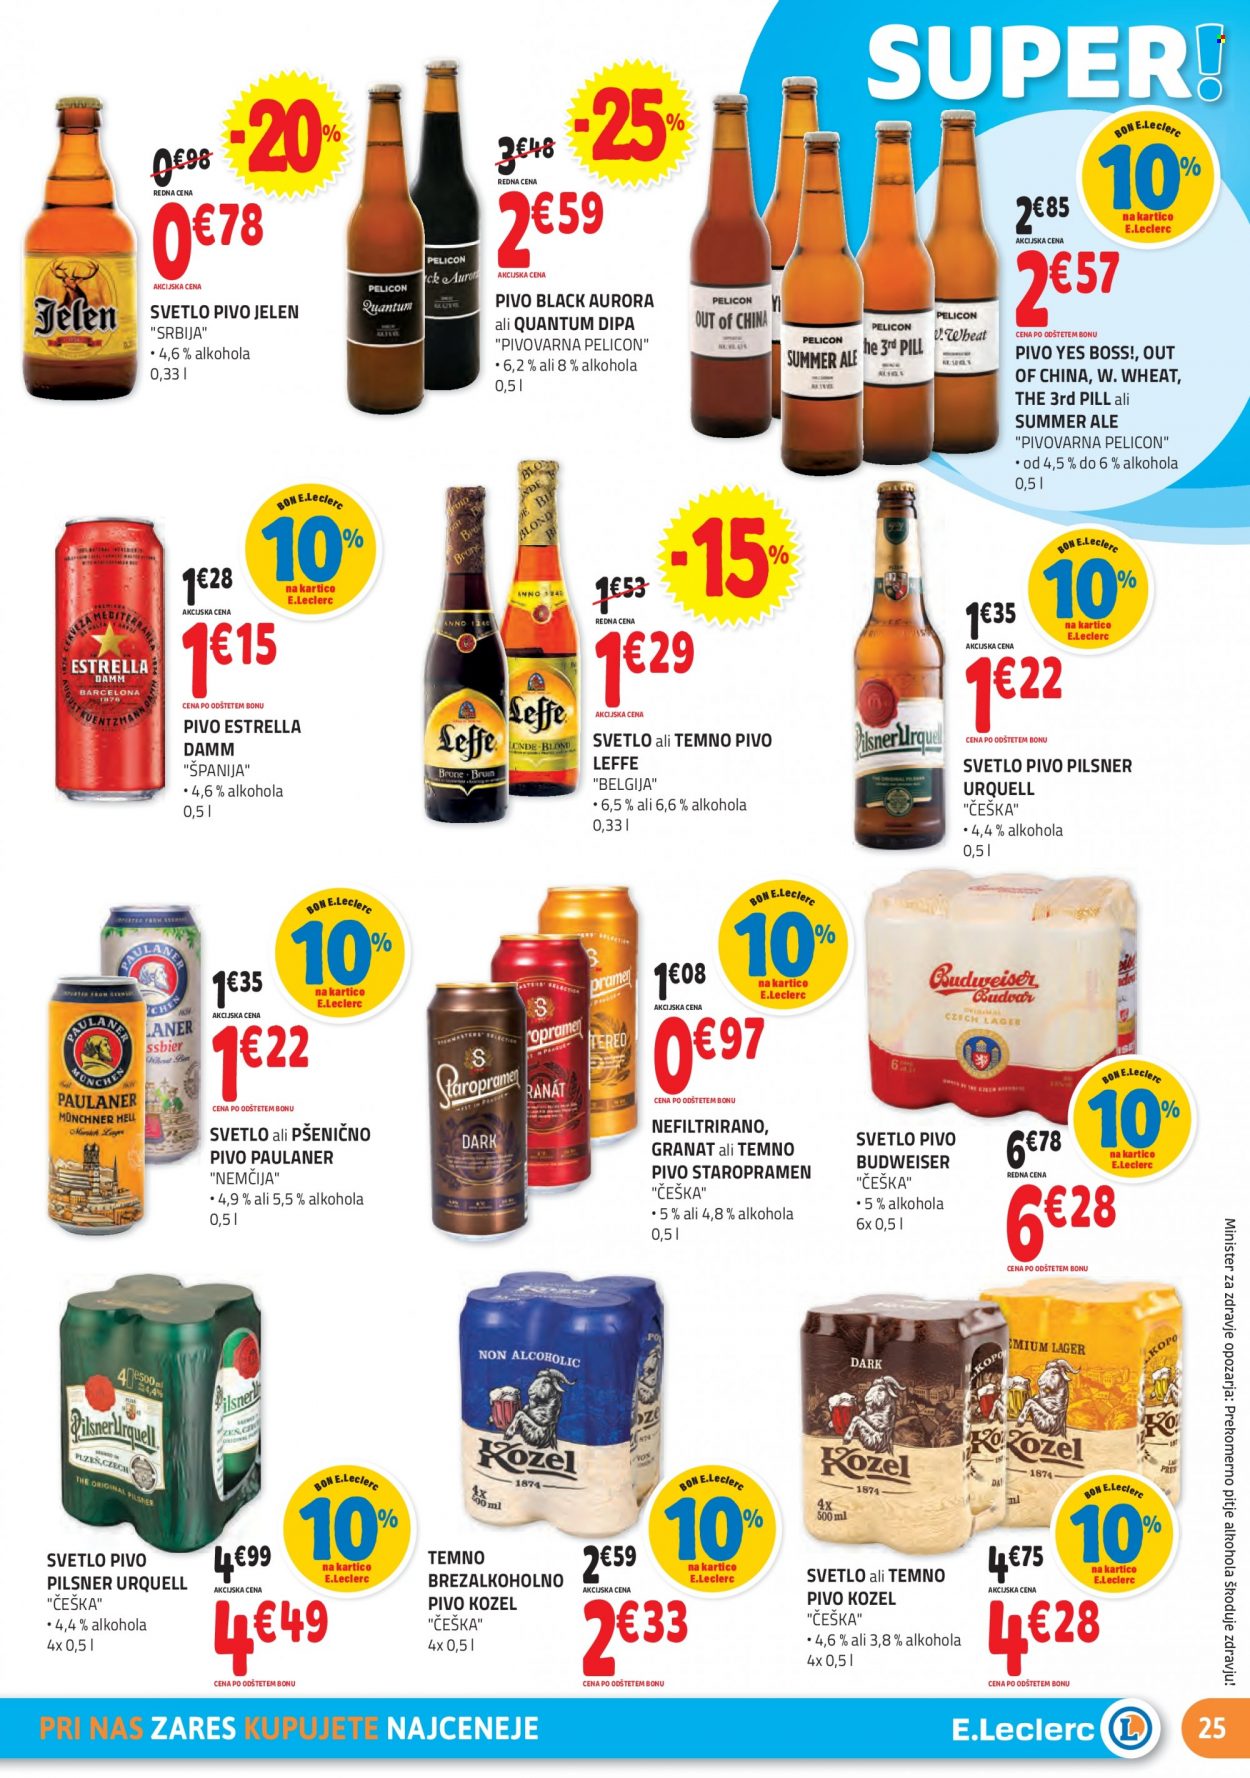 thumbnail - E.Leclerc katalog - 6.10.2021 - 16.10.2021 - Ponudba izdelkov - brezalkoholno pivo, damm, Kozel, Pilsner Urquell, Staropramen, svetlo pivo, temno pivo, pivo. Stran 25.